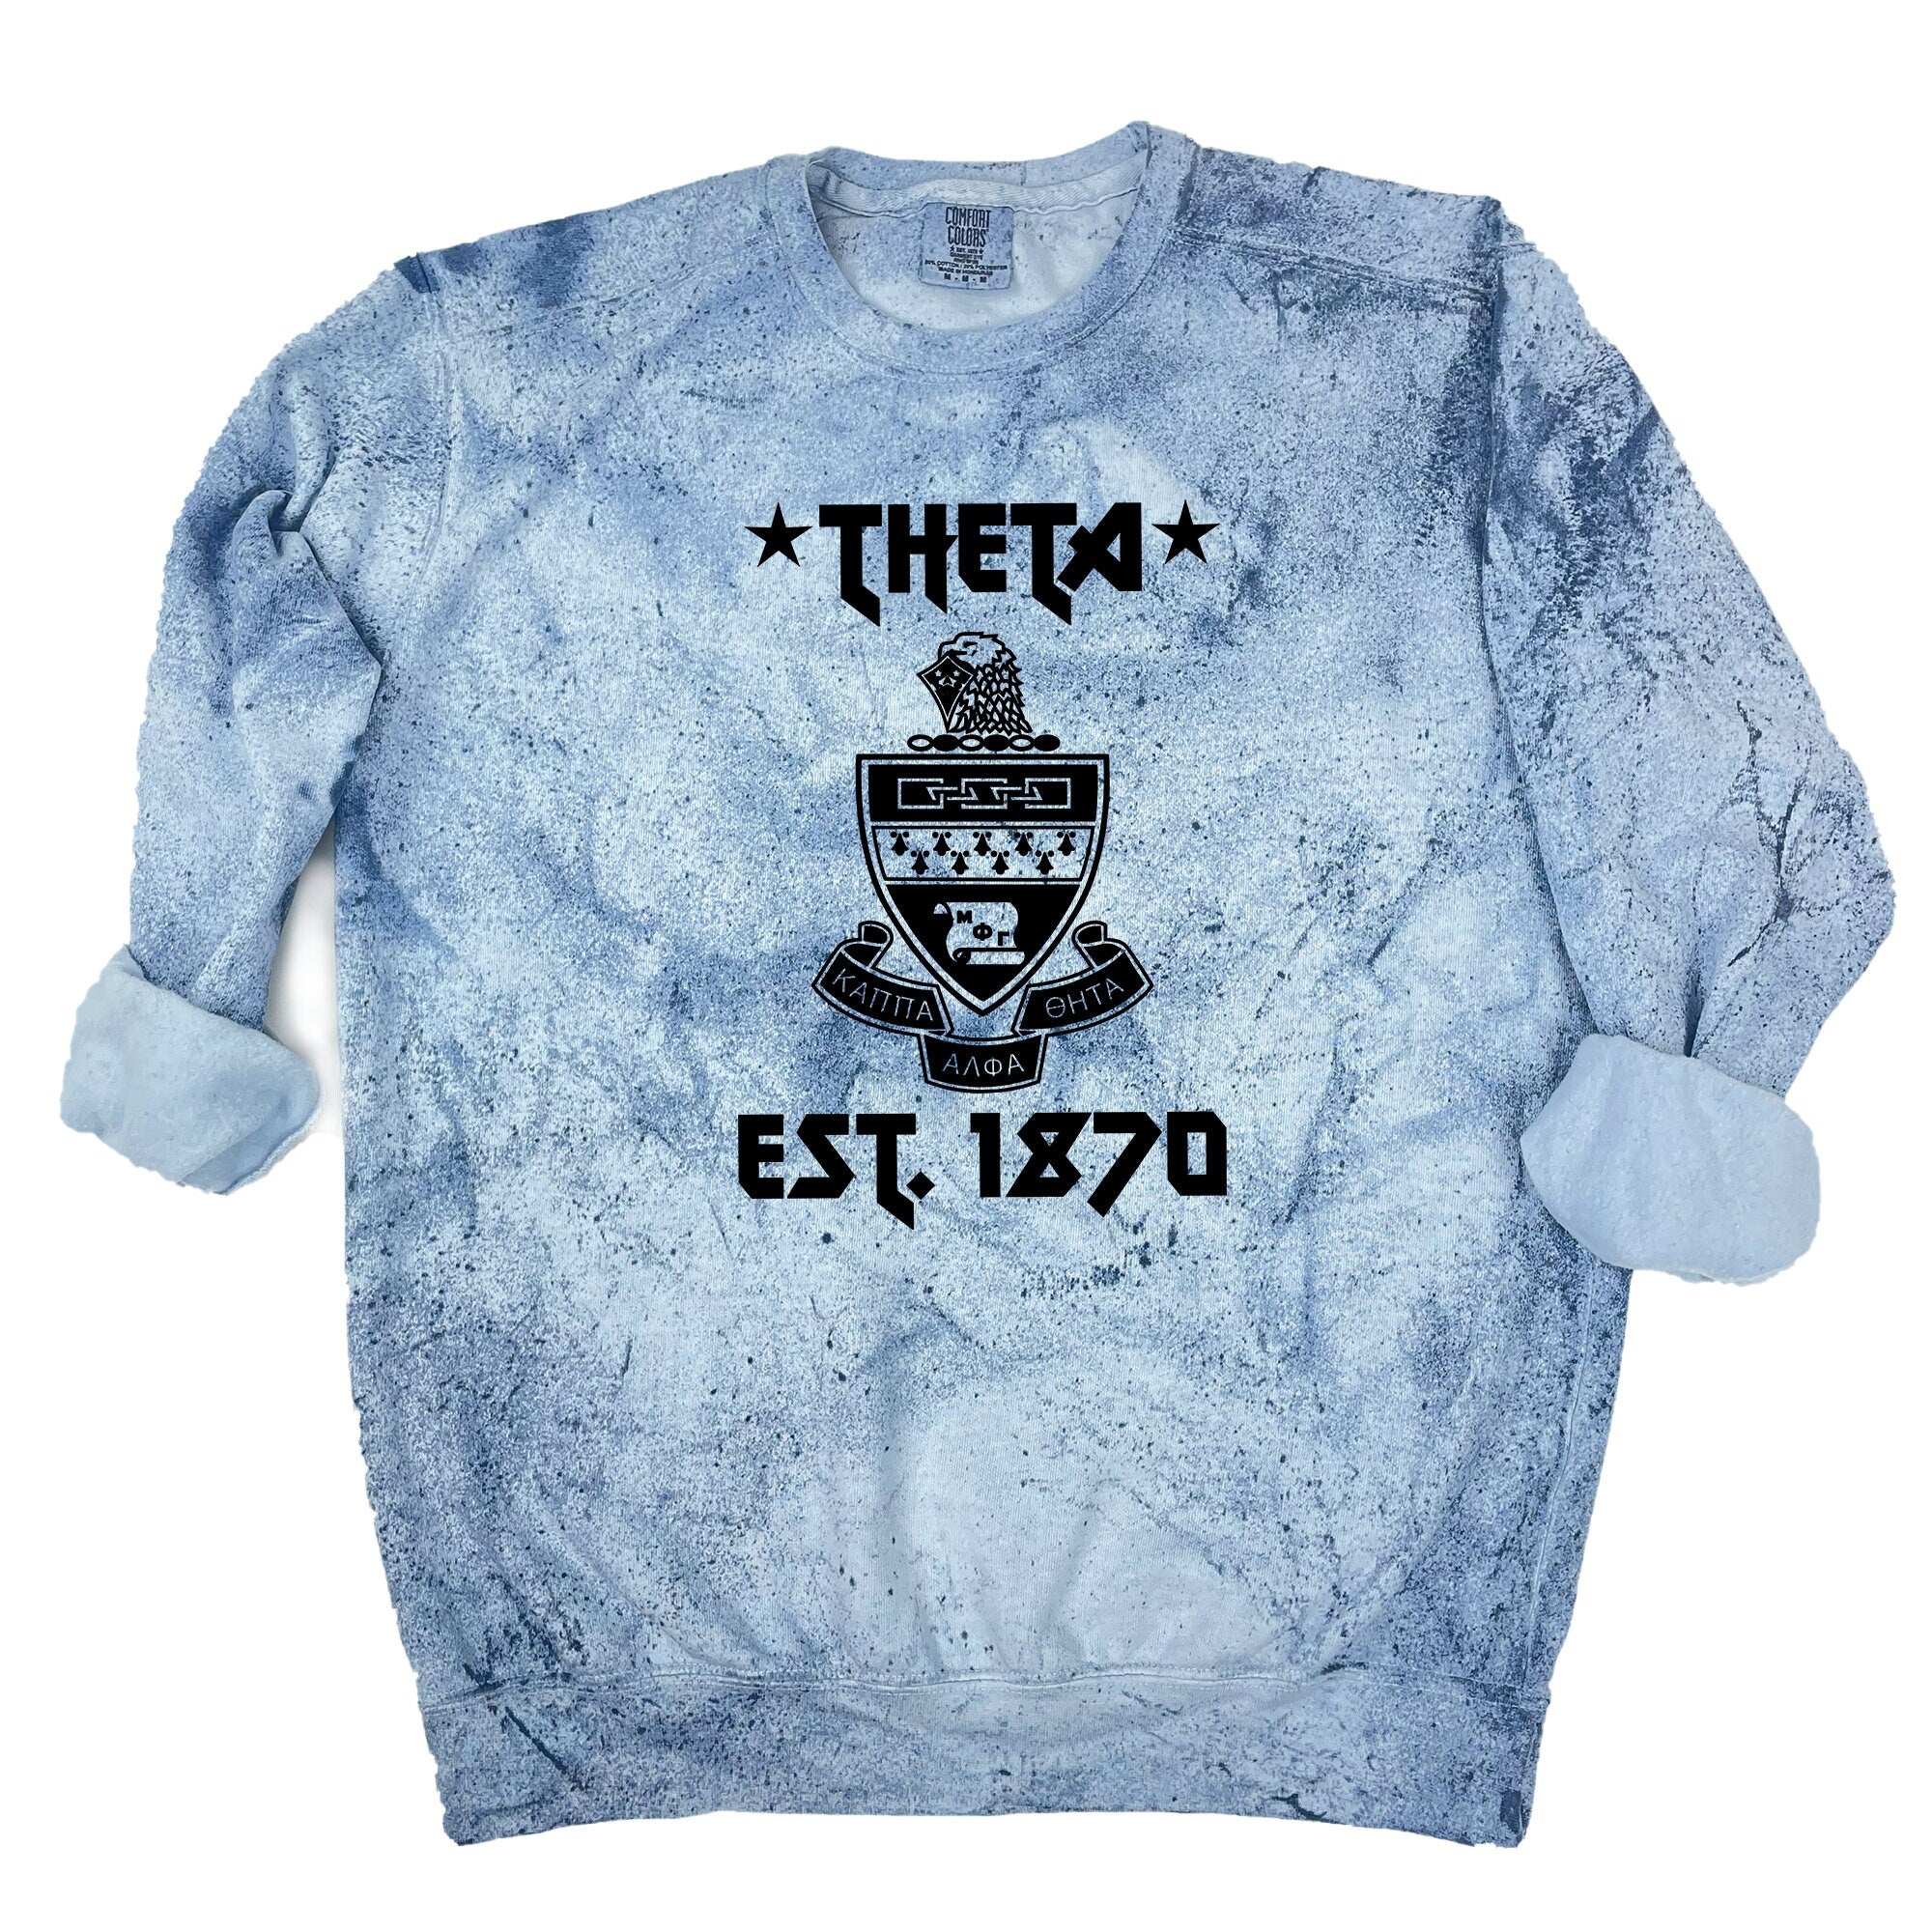 Kappa Kappa Gamma Vintage Sweatshirt – Go Chic